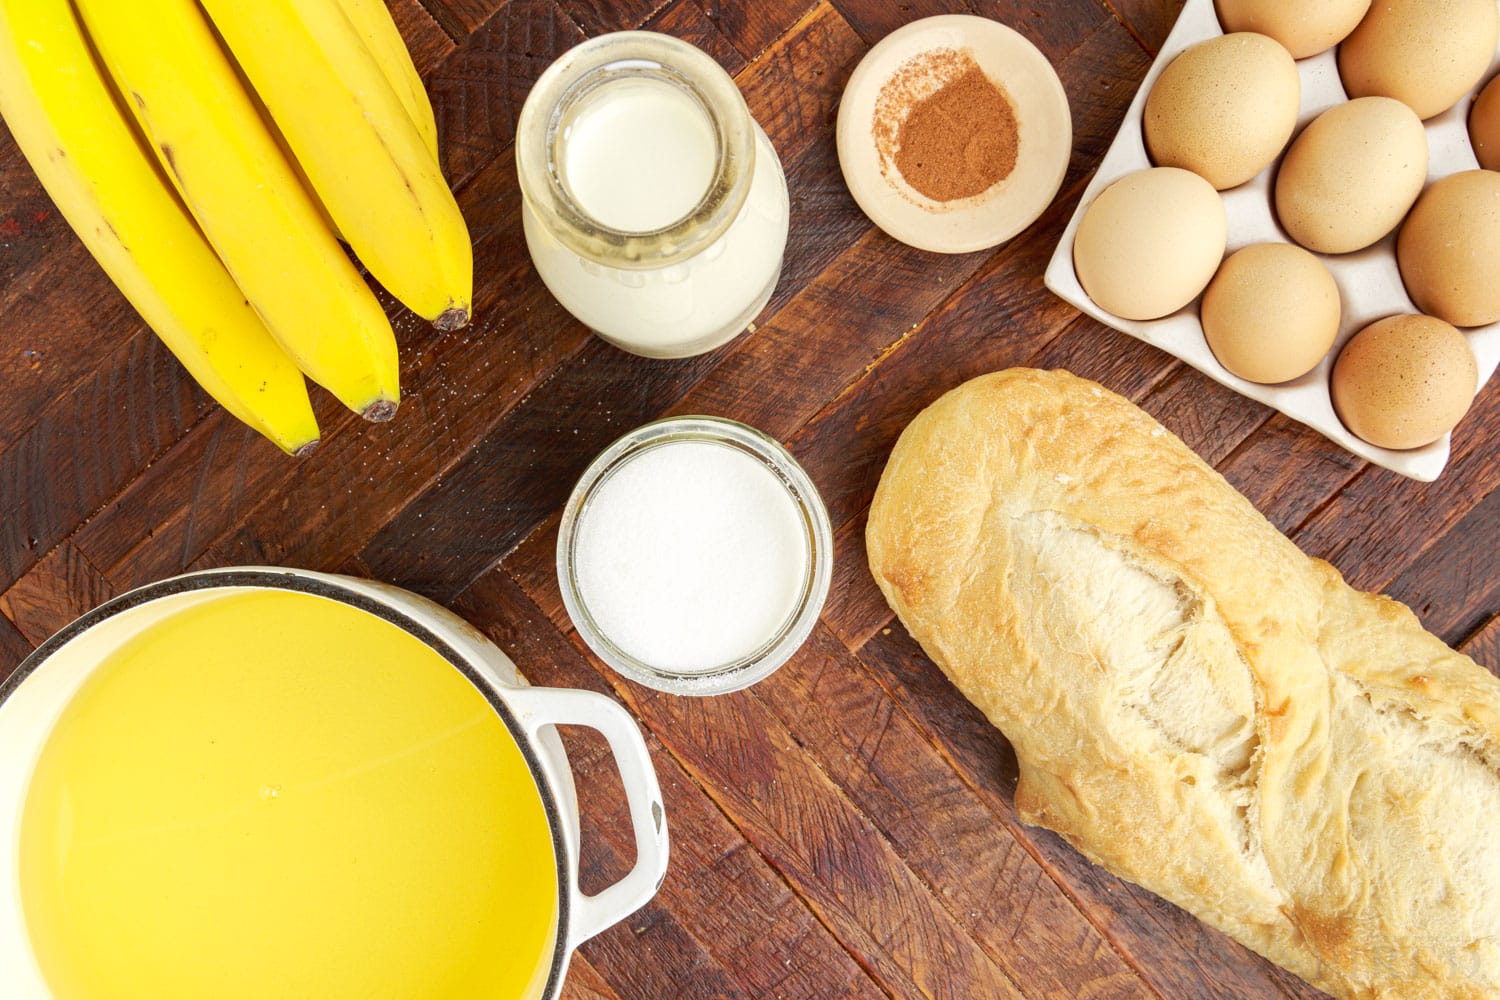 ingredients needed to make copycat tonga toast - eggs, cinnamon, sugar, milk, bananas, butter and baguette